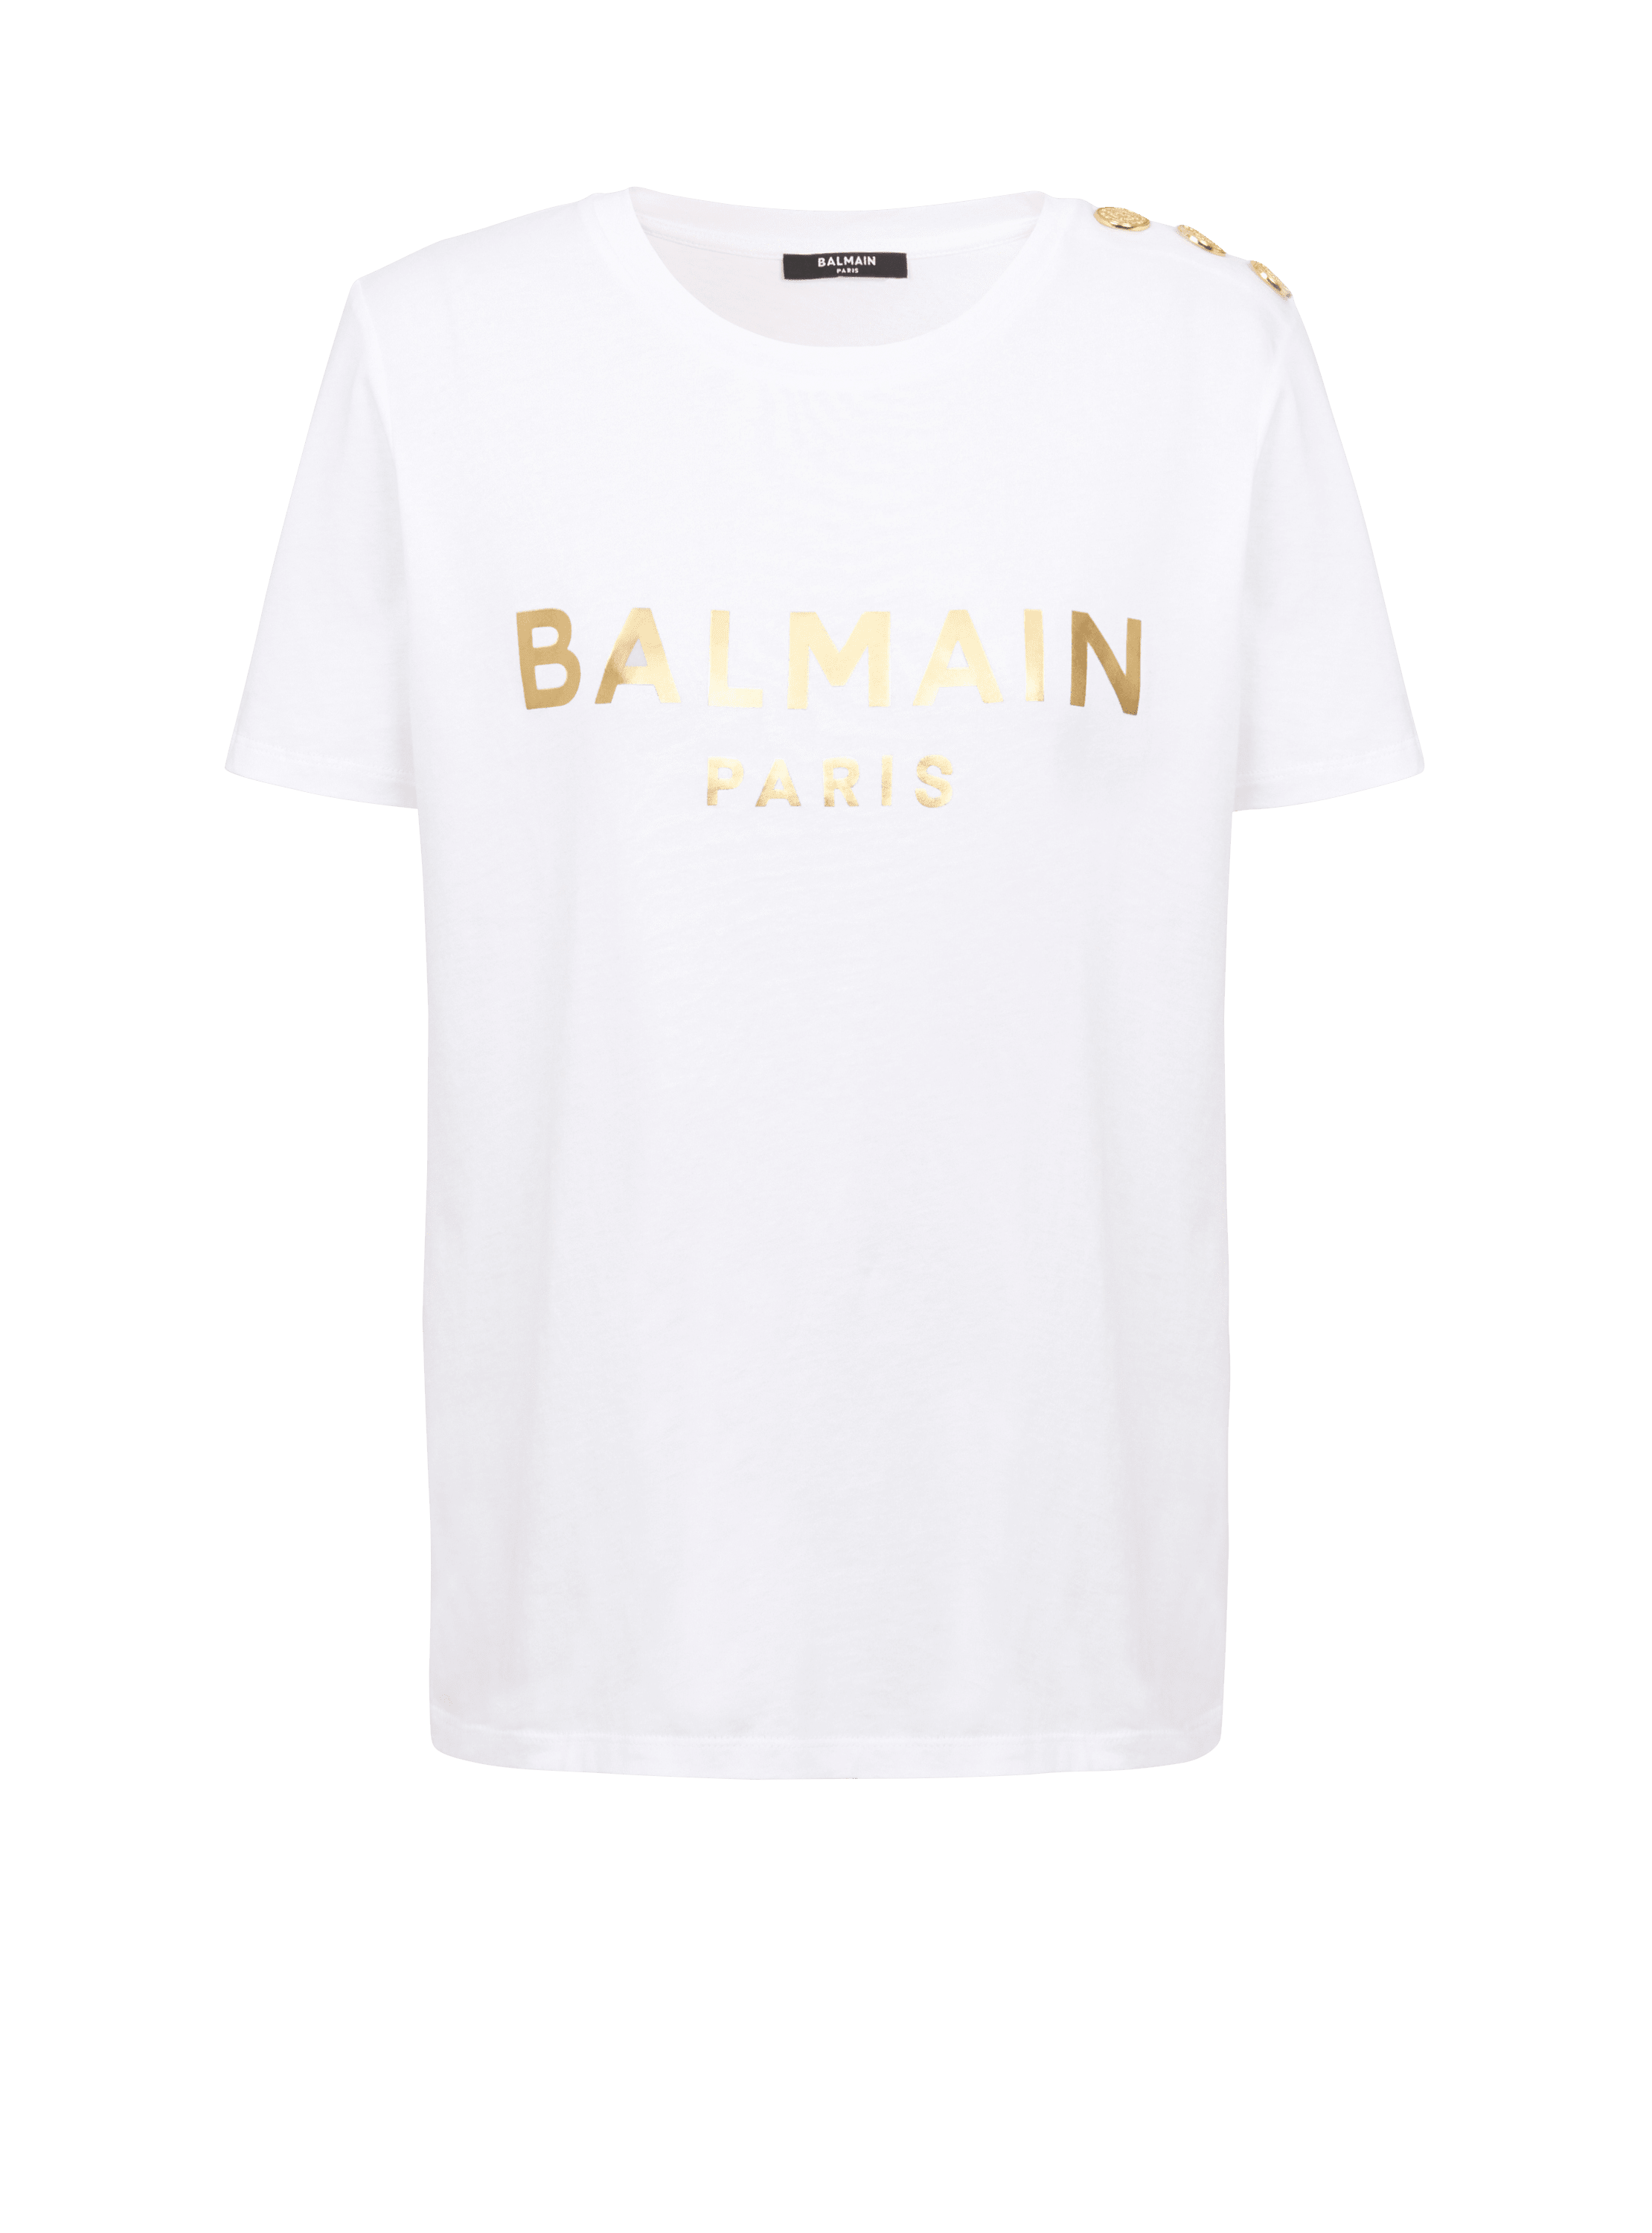 Balmain Kids Cotton graphic-print Shorts - Black